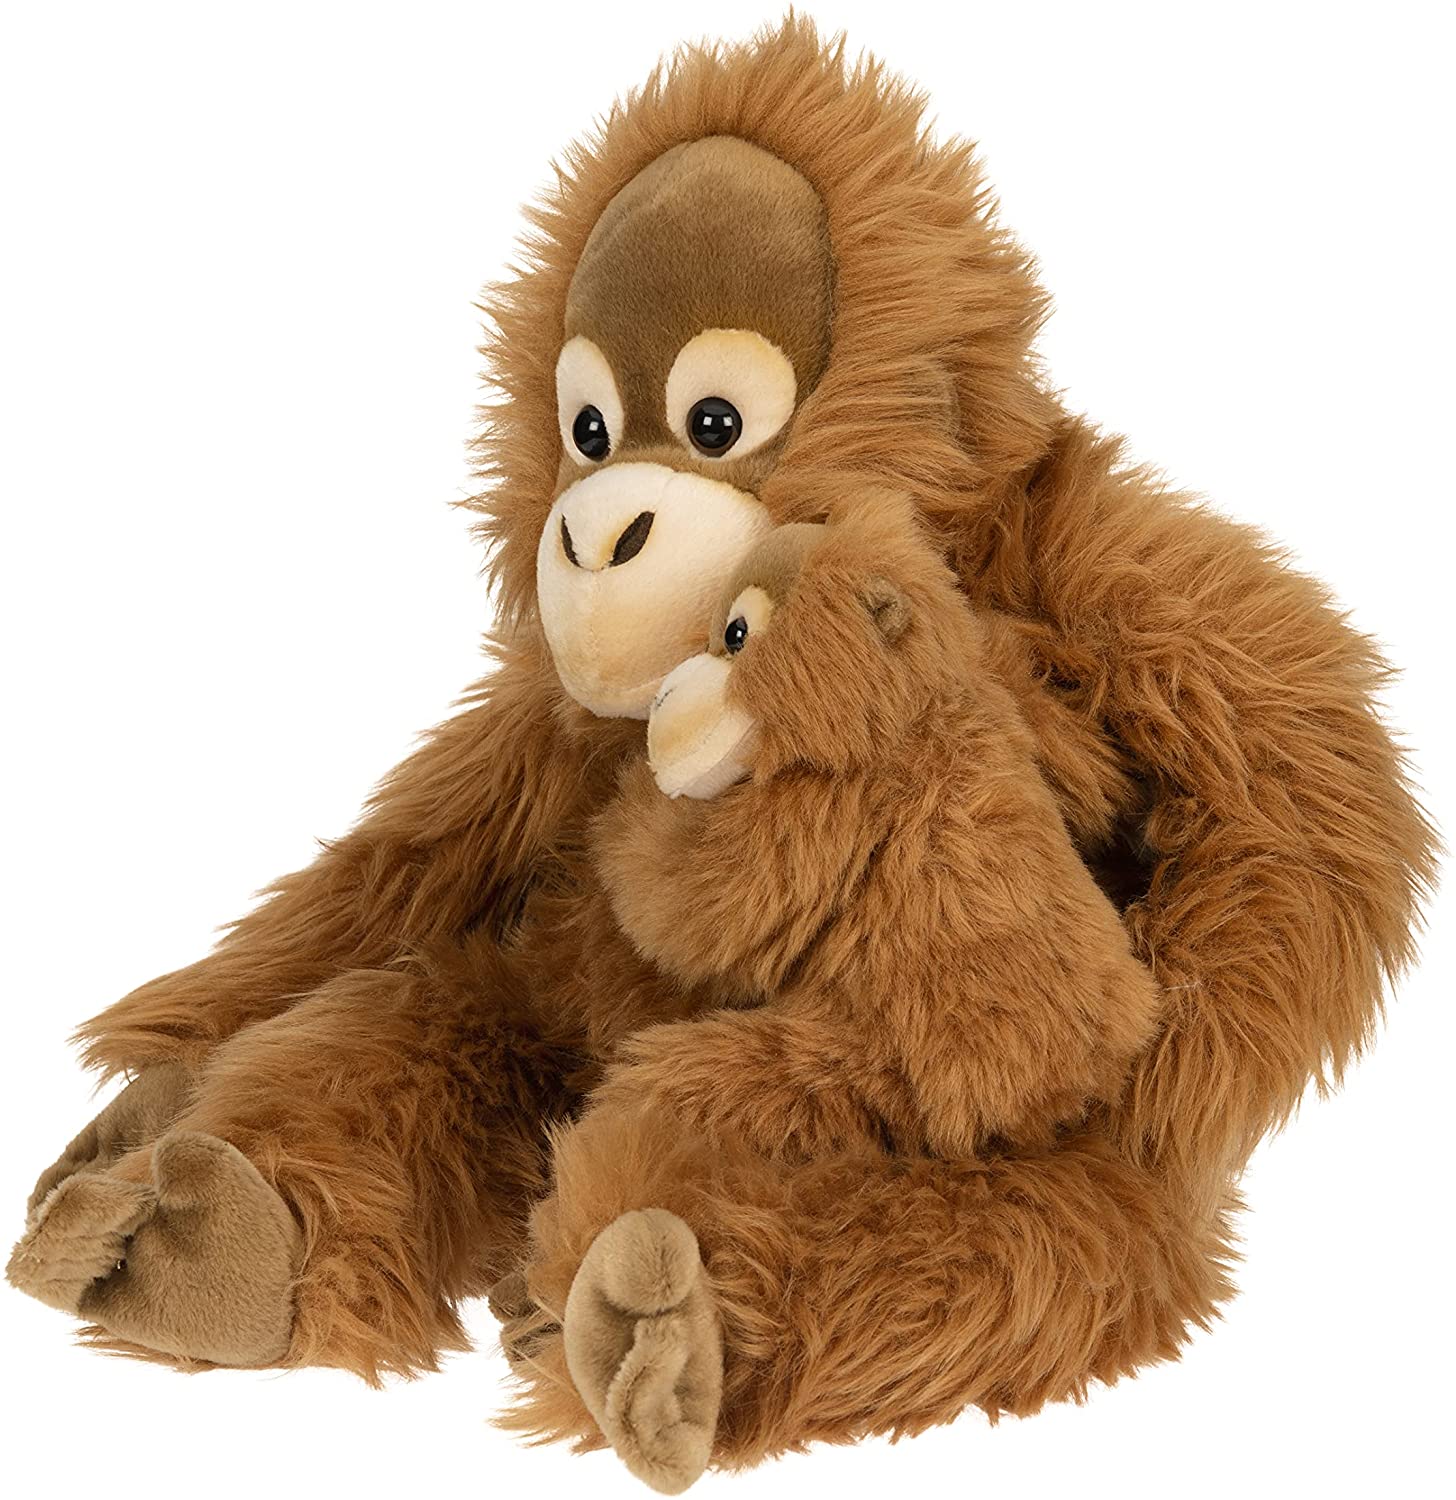  orangutan with baby, sitting - 30 cm (height) 